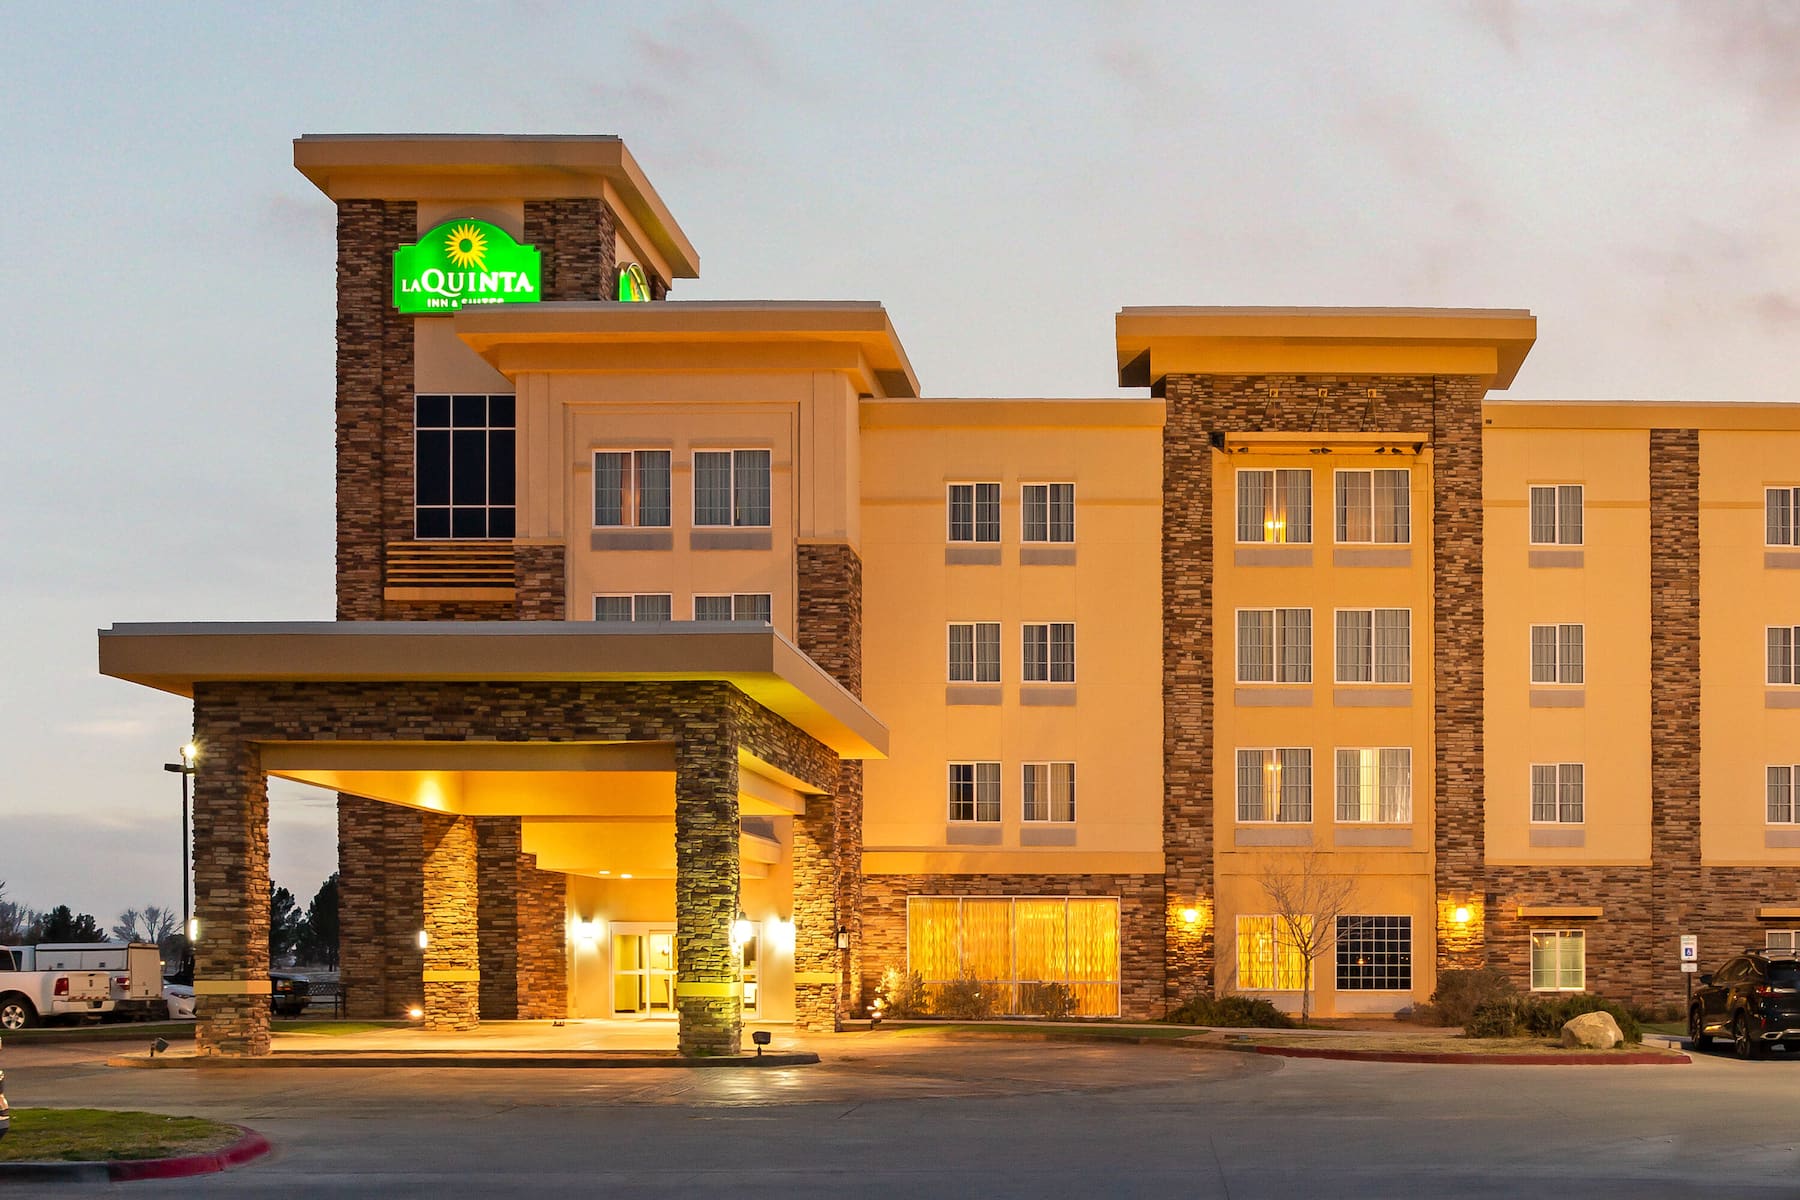 Exterior Dusk Image of La Quinta Inn & Suites by Wyndham Pecos hotel in Pecos, Texas